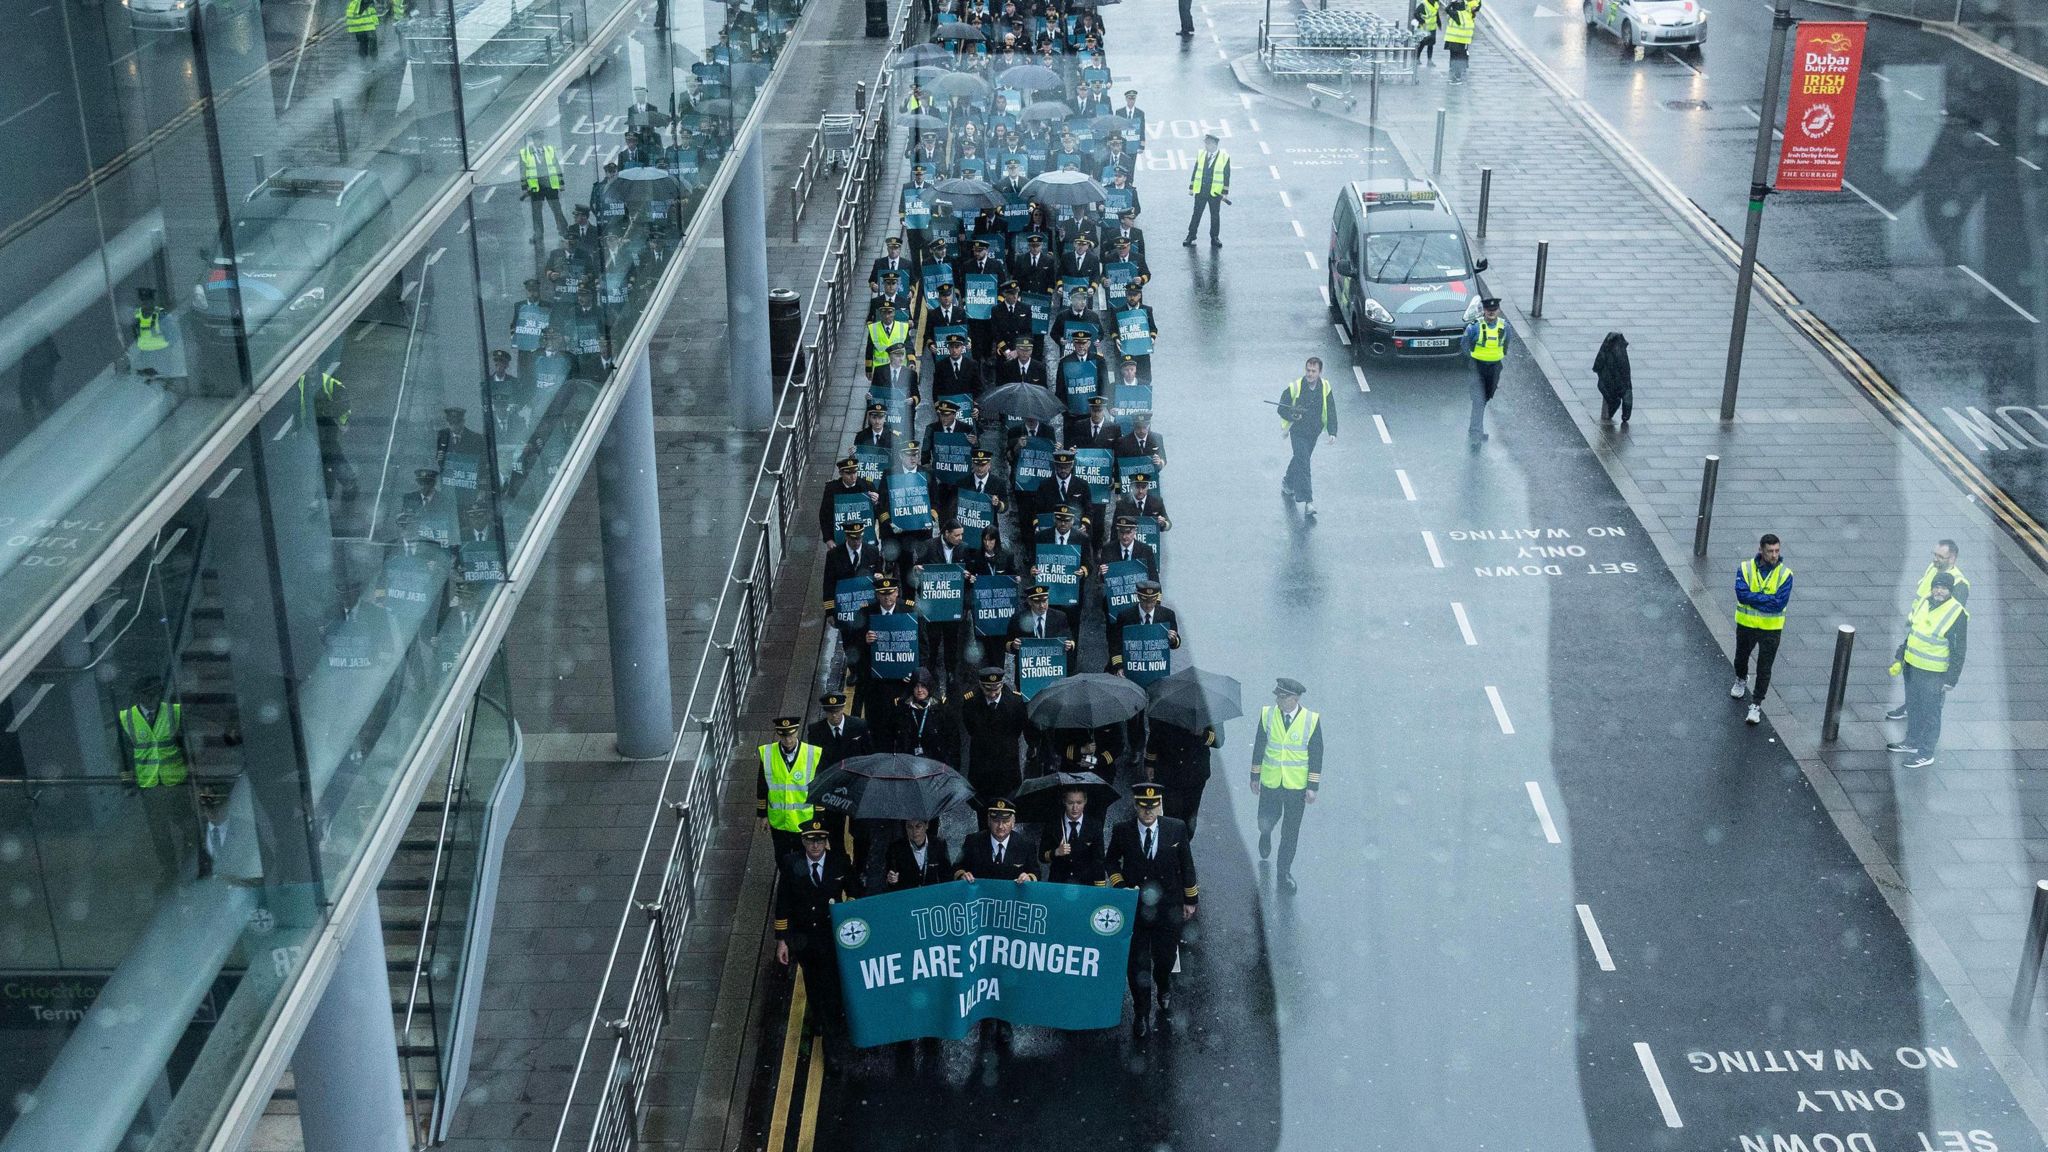 Striking Aer Lingus pilots march around Dublin Airport